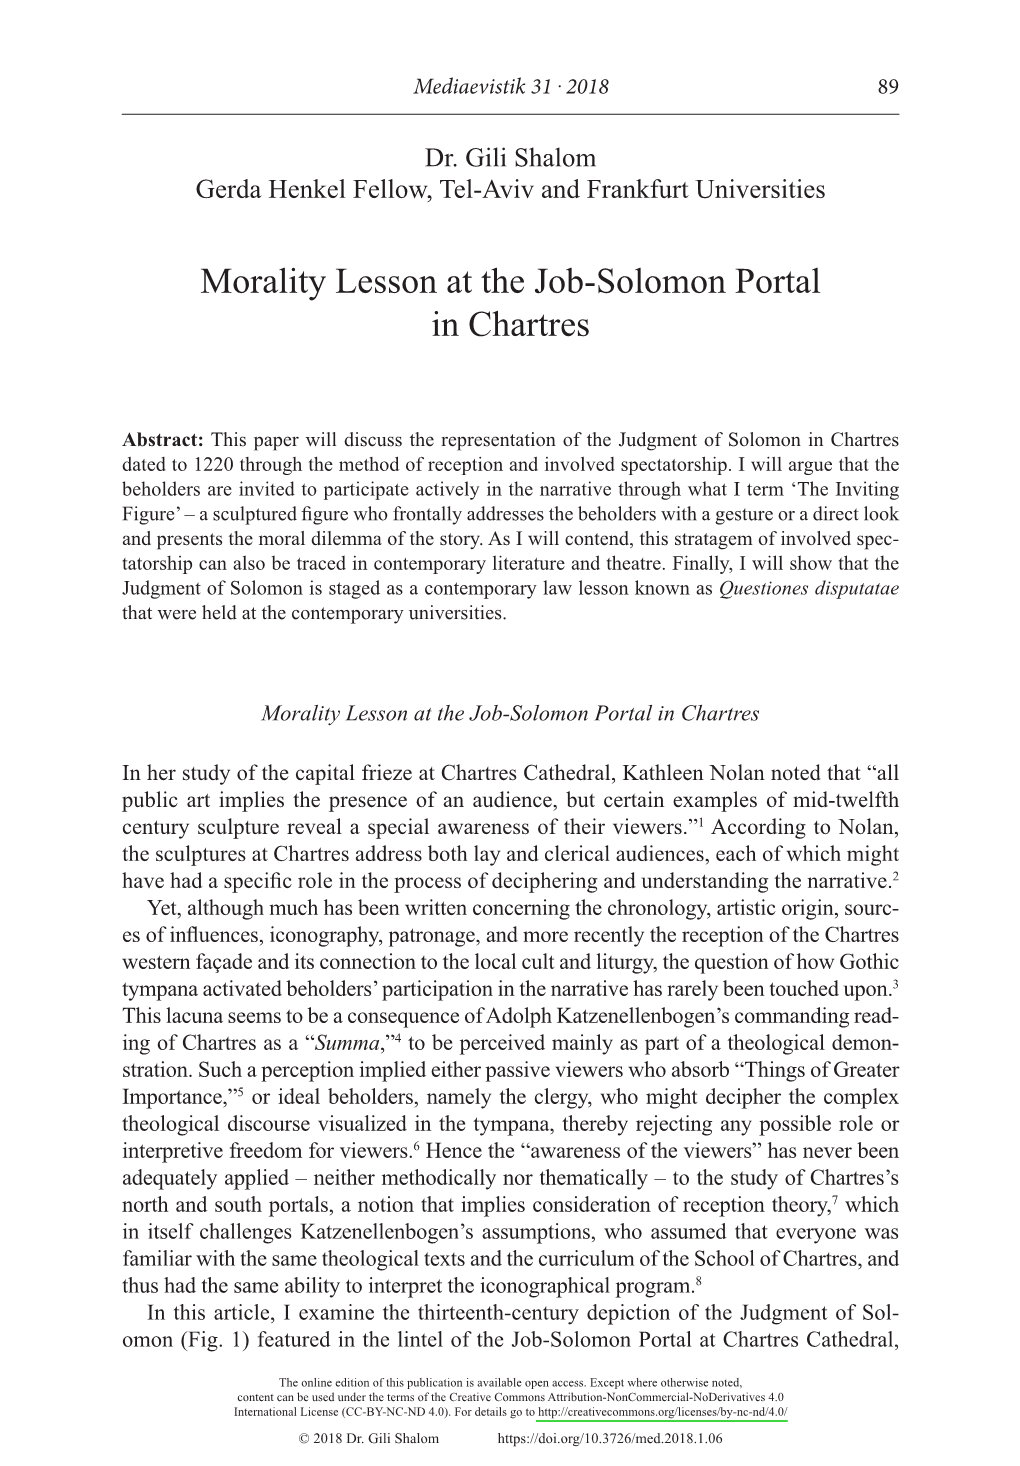 Morality Lesson at the Job-Solomon Portal in Chartres